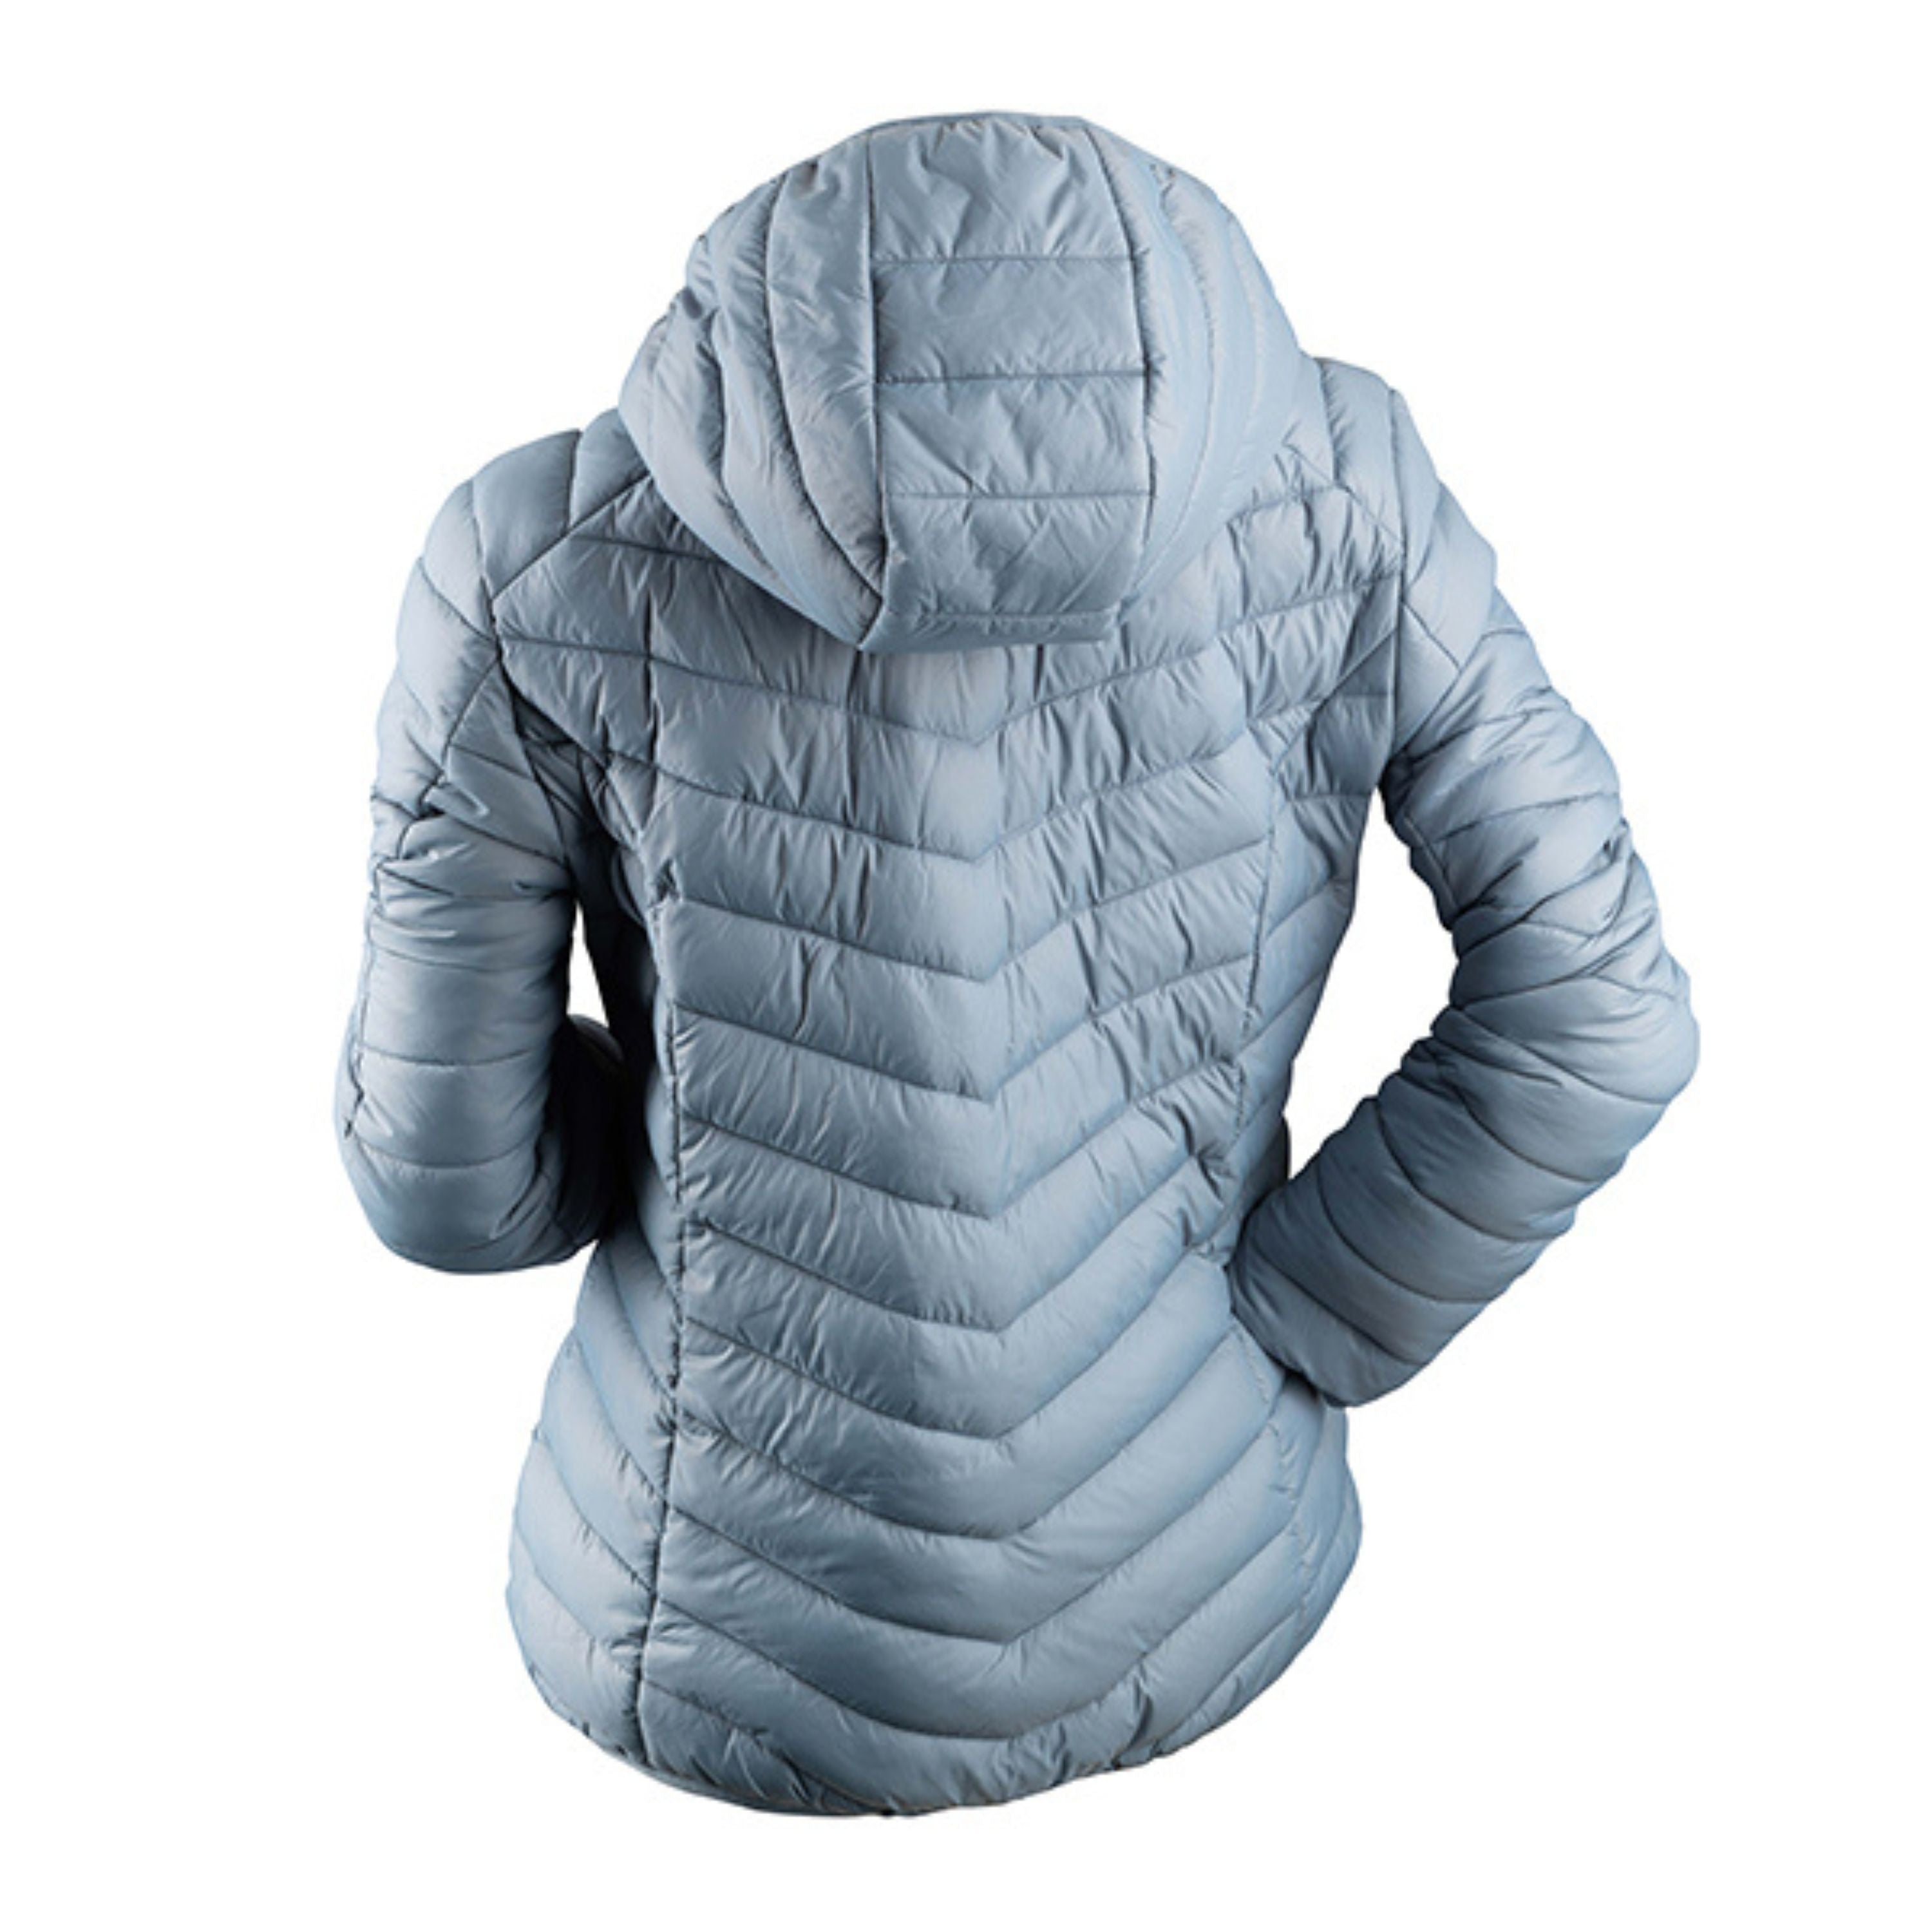 Manteau isolé "Travelex" avec capuchon - Femme||"Travelex" Insulated jacket with hood- Women's